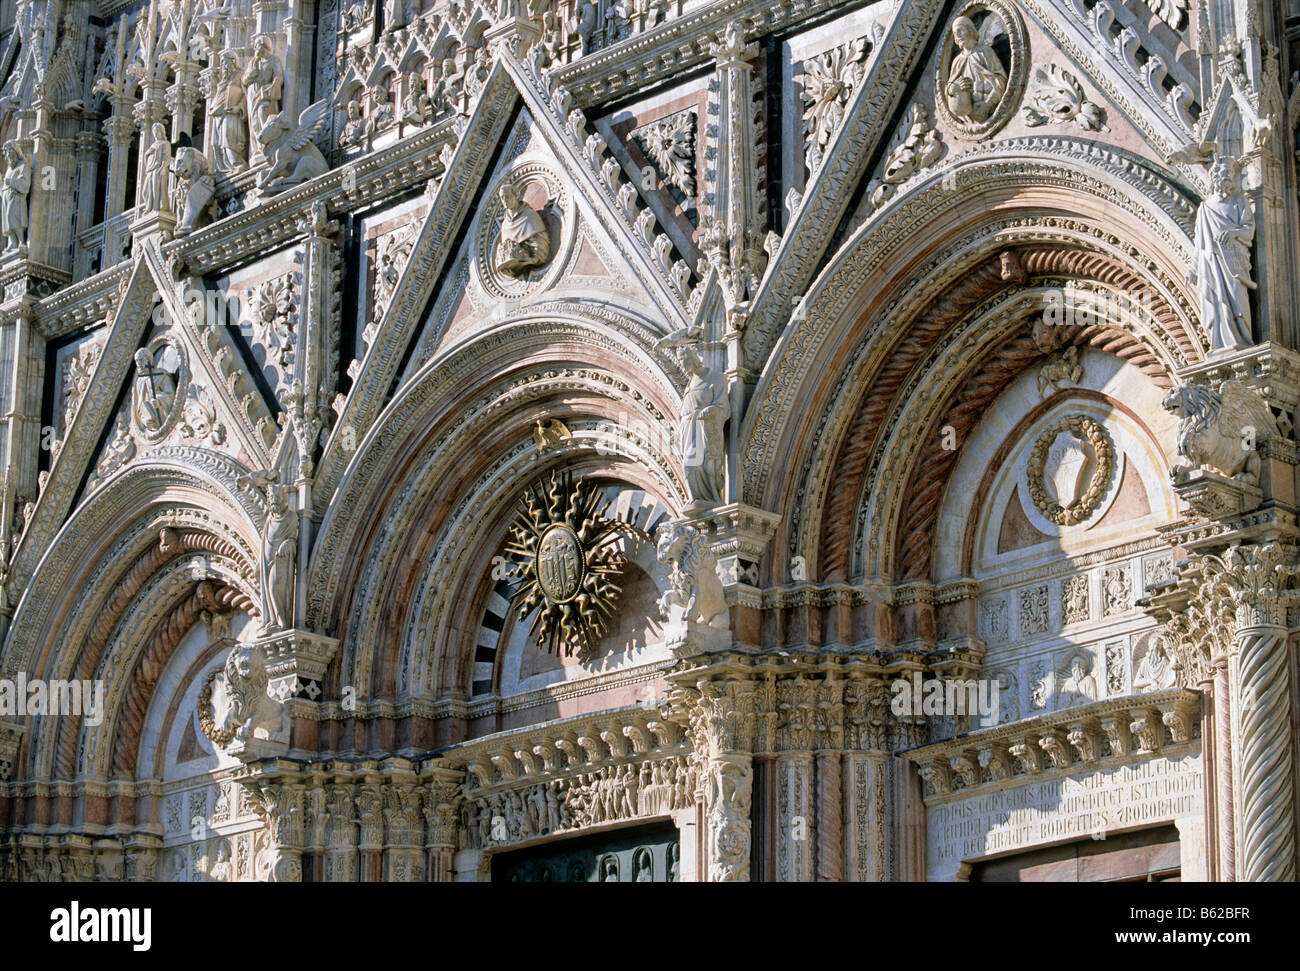 Santa Maria Assunta Cathedral, facade, arcades above the entrance, Siena, Tuscany, Italy, Europe Stock Photo